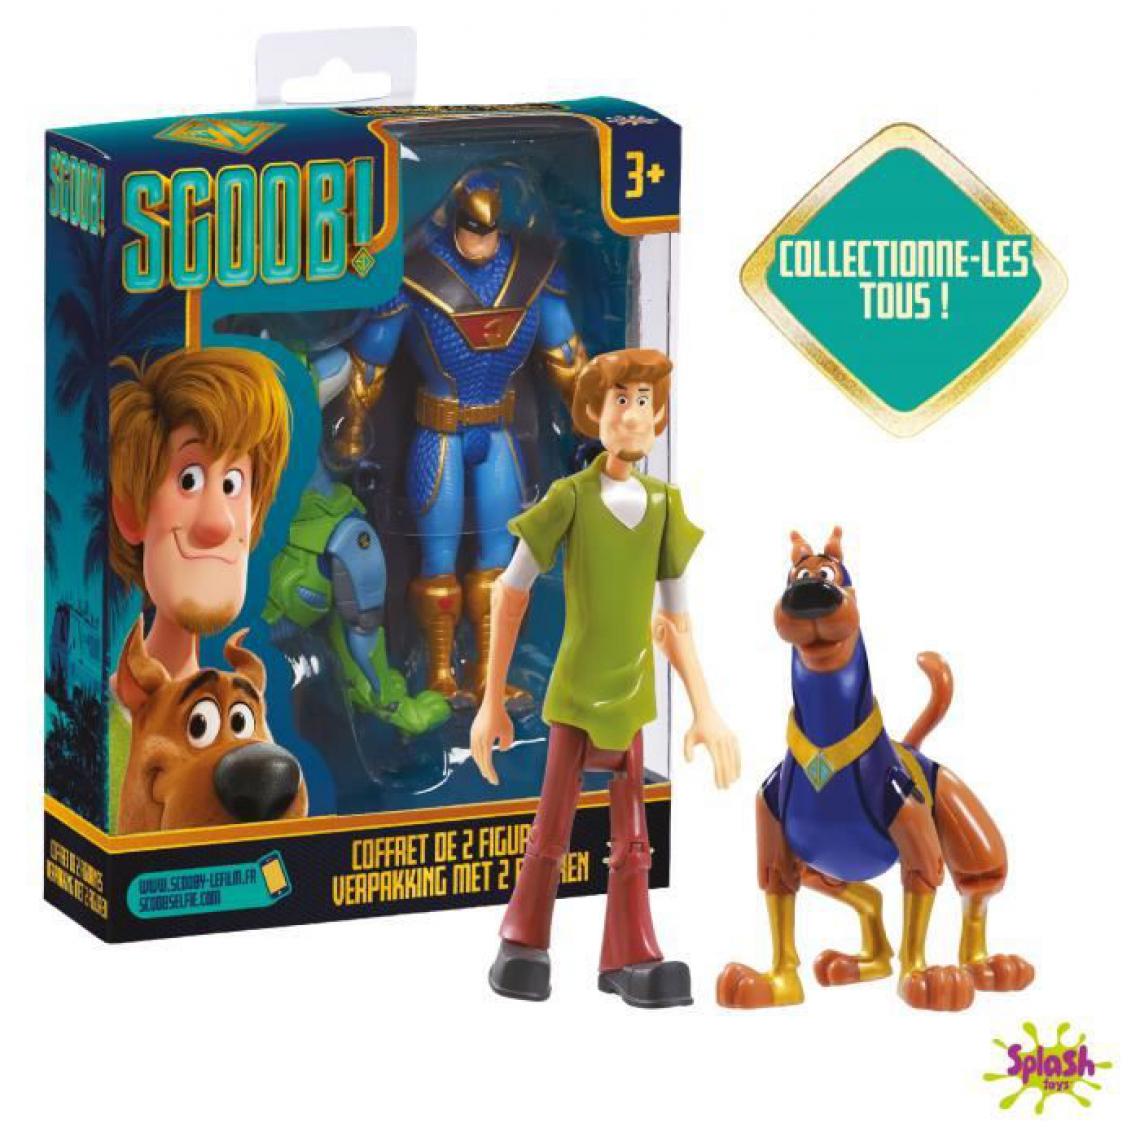 Icaverne - FIGURINE MINIATURE - PERSONNAGE MINIATURE Scooby Doo -Pack de 2 figurines - assortiment aléatoire - Films et séries